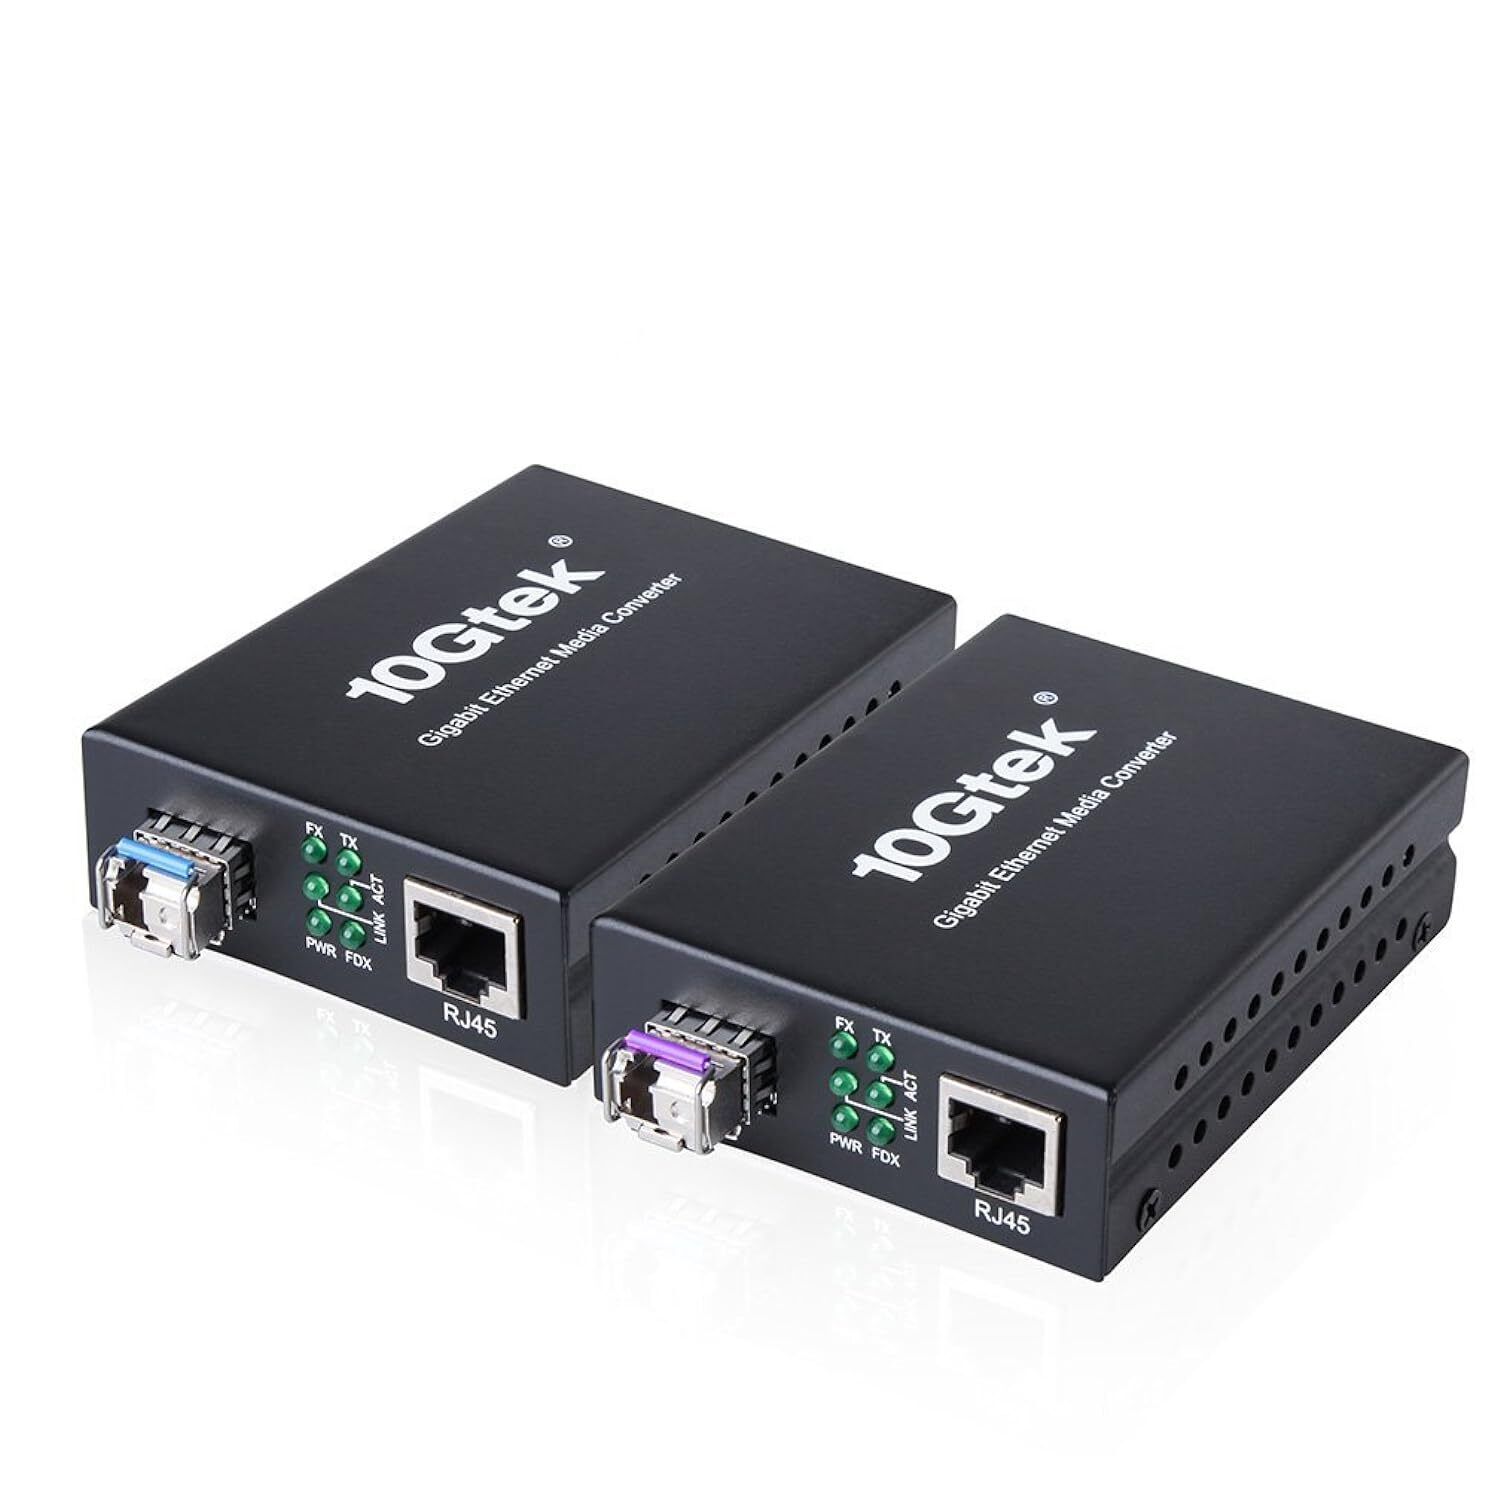 A Pair Of Bidi Gigabit Single-Mode Lc Fiber To Ethernet Media Converter, With